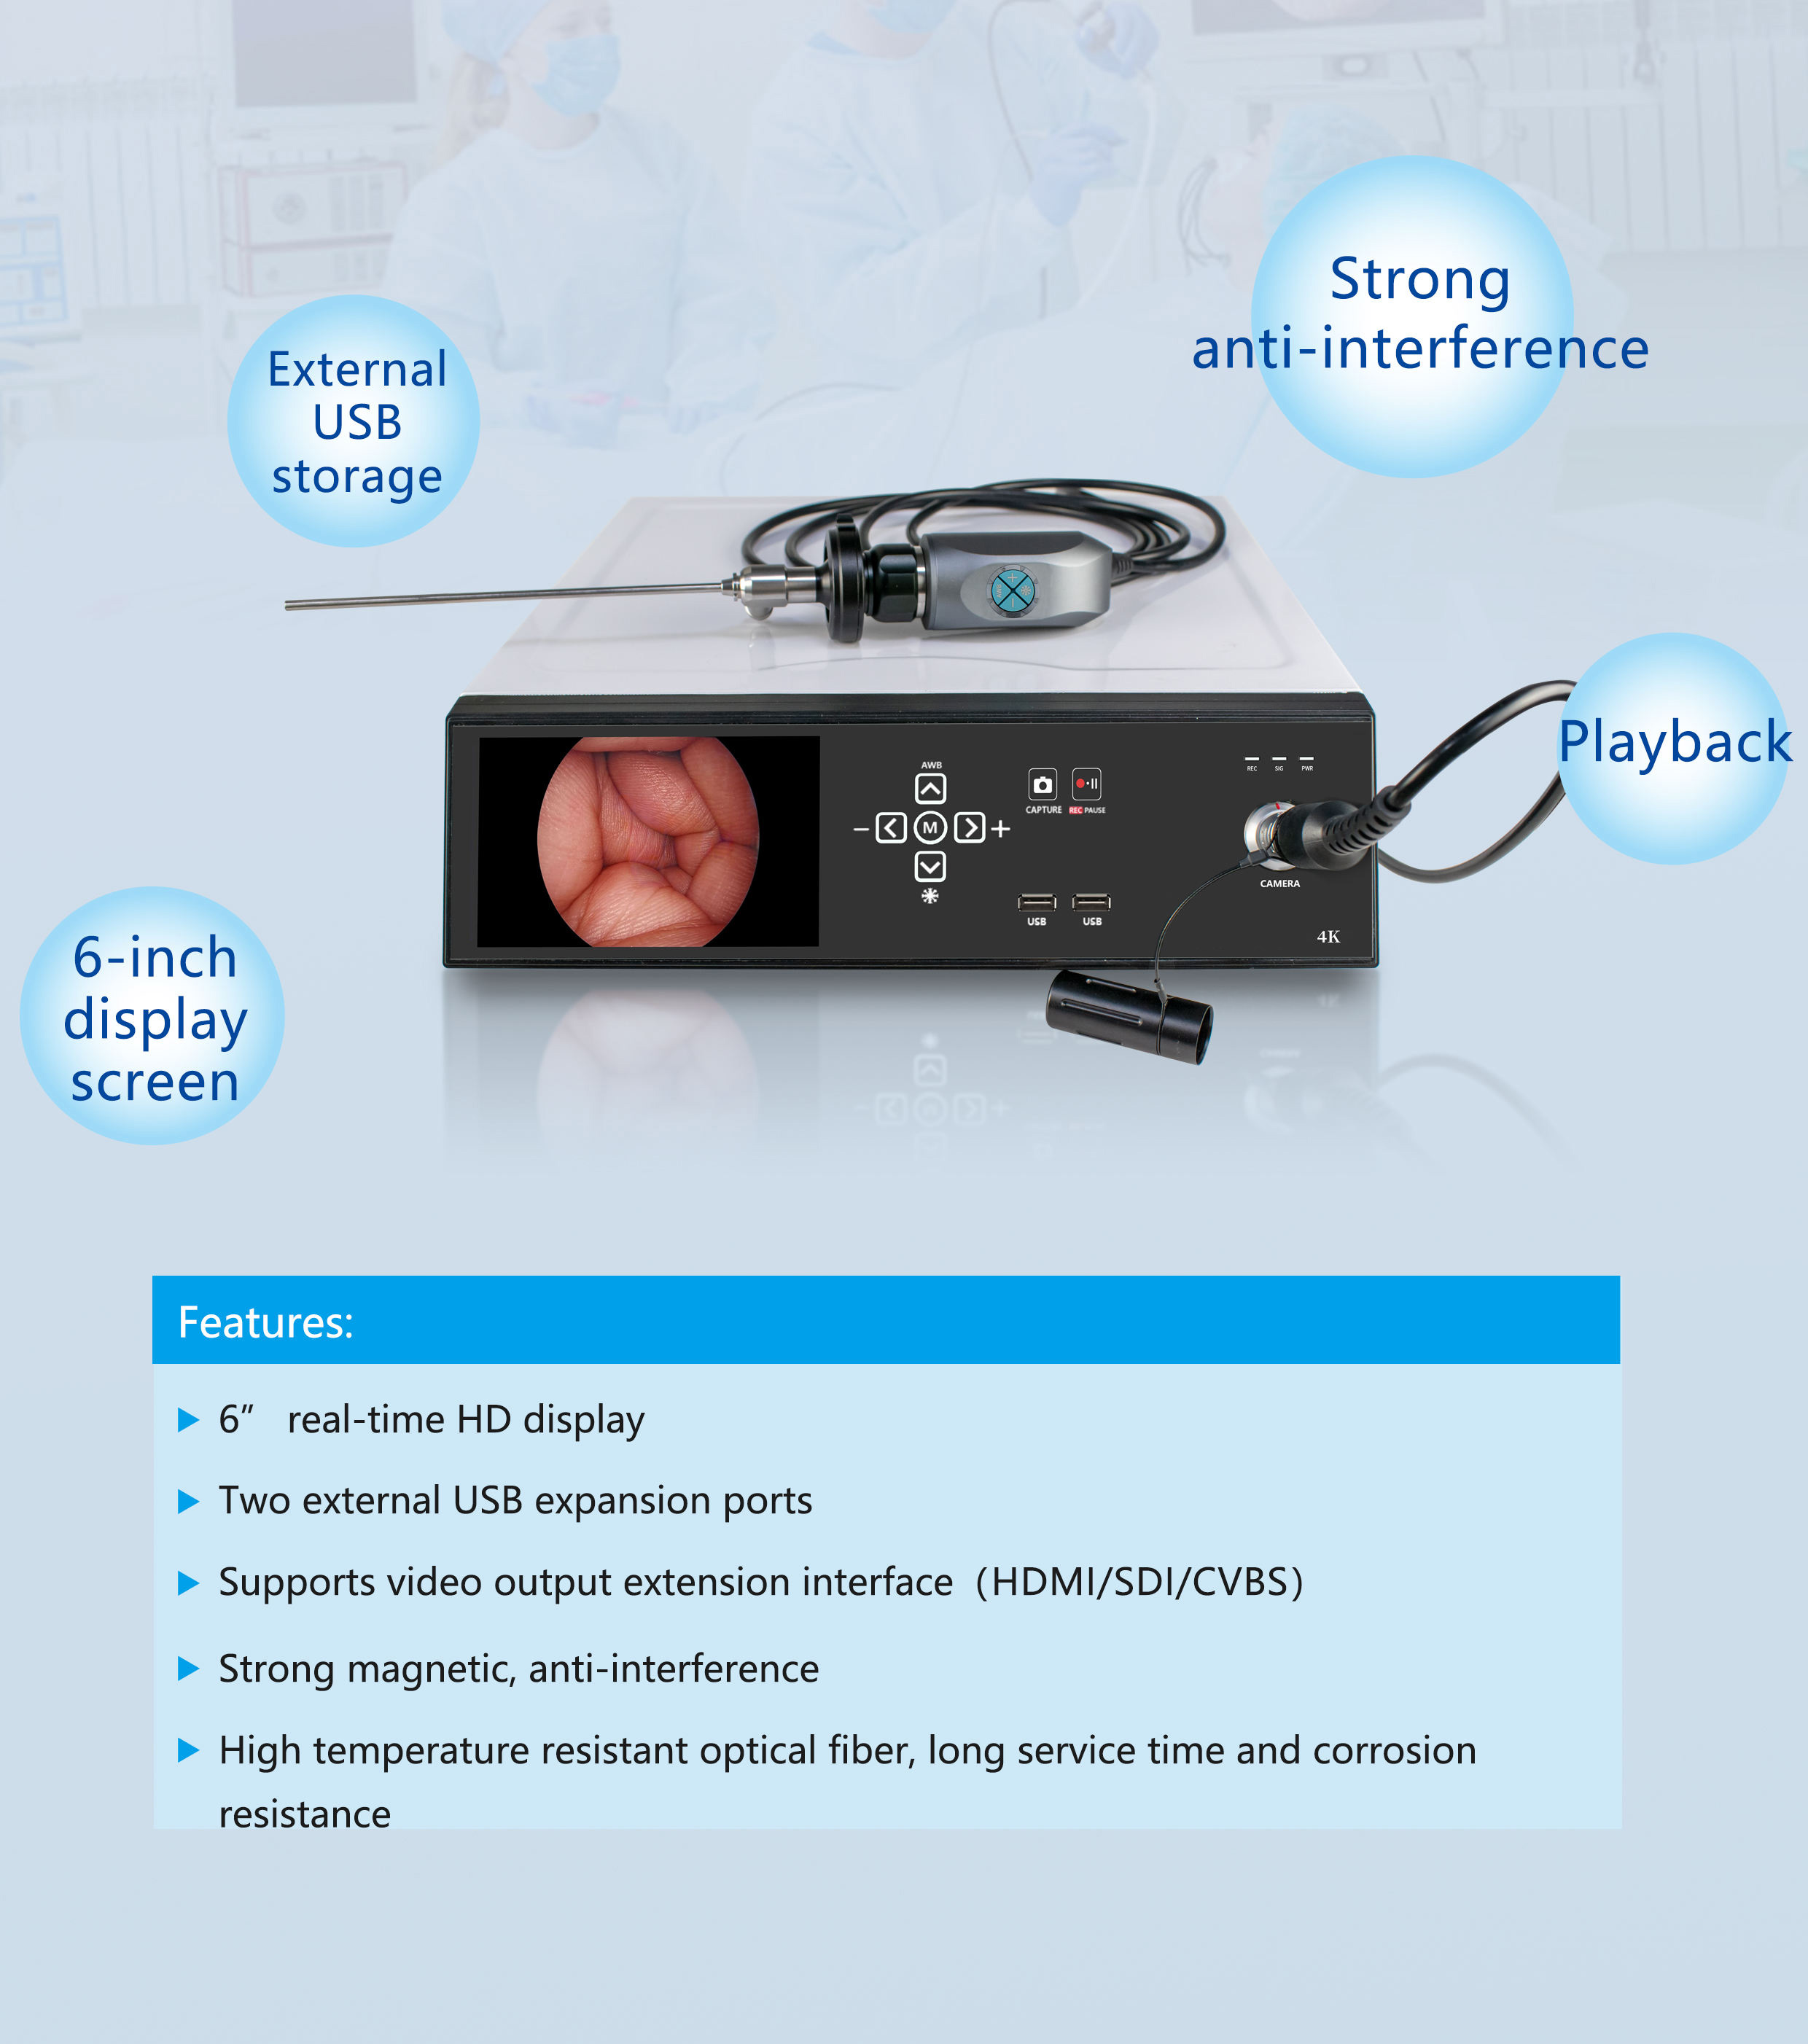 4K UHD Video Endoscope System Laparoscopy Camera For Rigid Endoscopy With USB Record